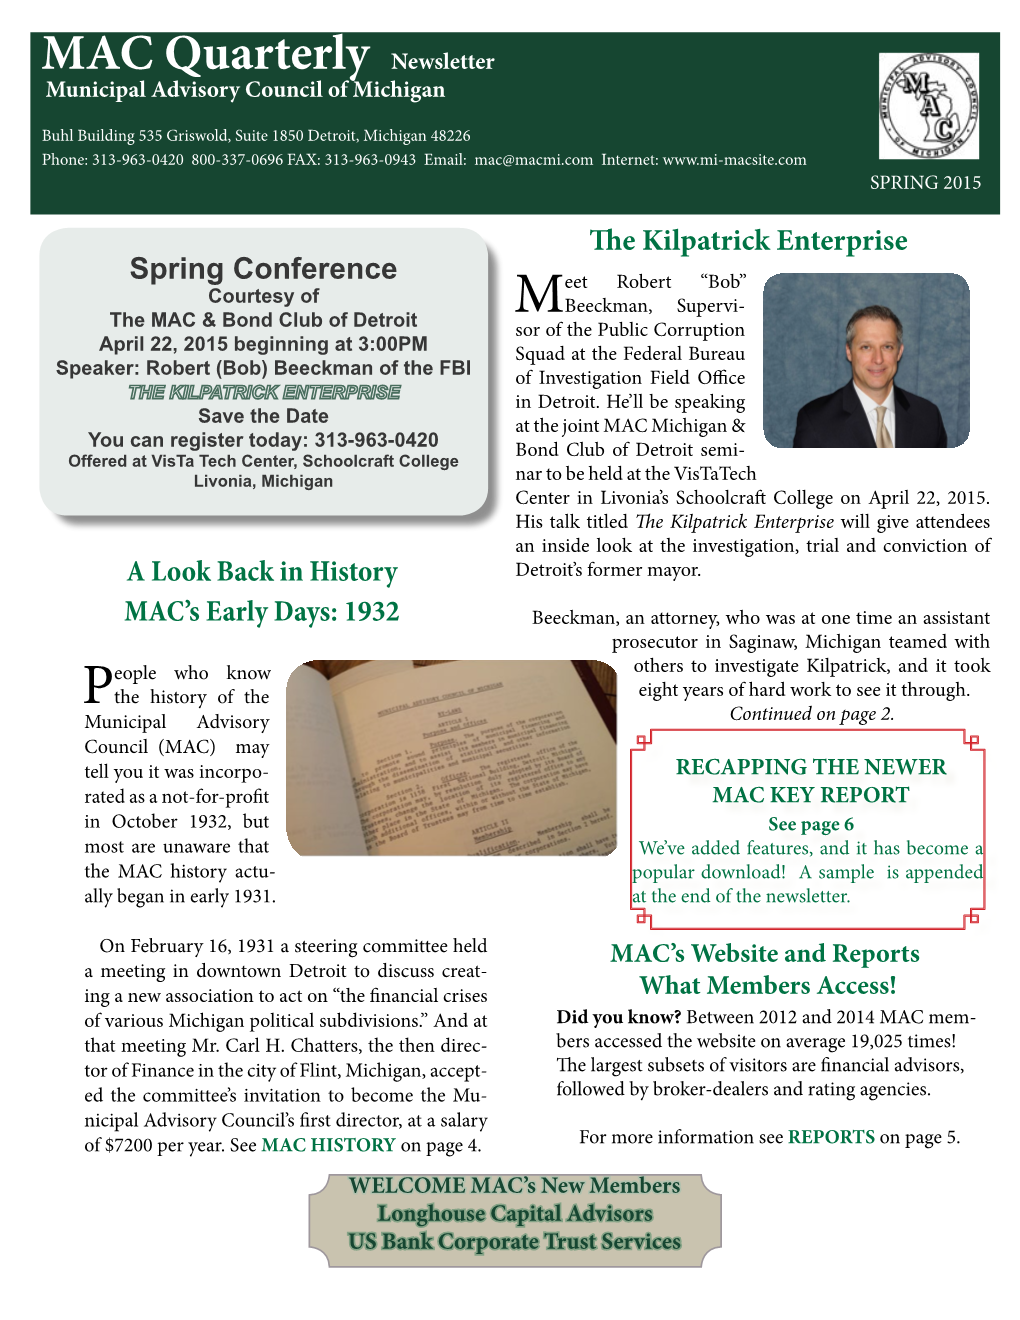 MAC Spring Newsletter 2015 4/2/2015